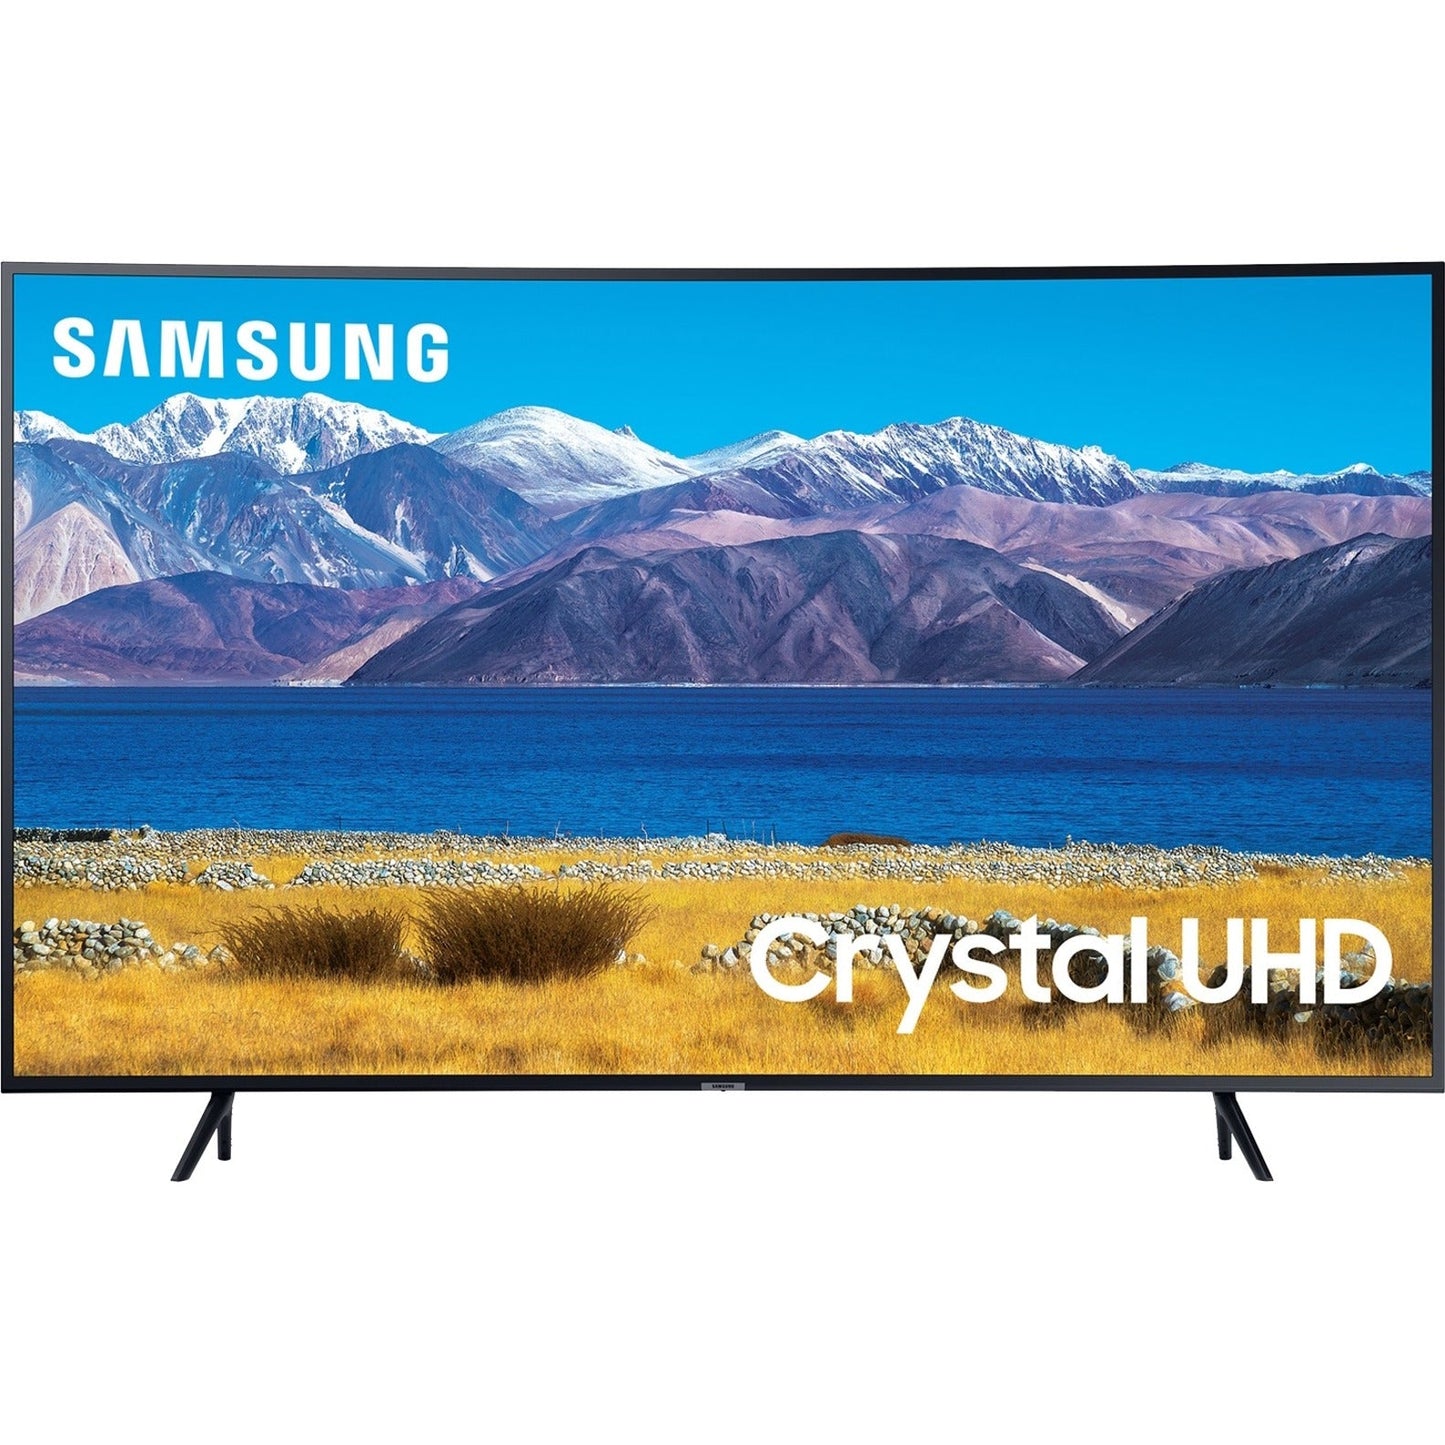 Samsung TU8300 UN65TU8300 64.5" Curved Screen Smart LED-LCD TV - 4K UHDTV - Charcoal Black